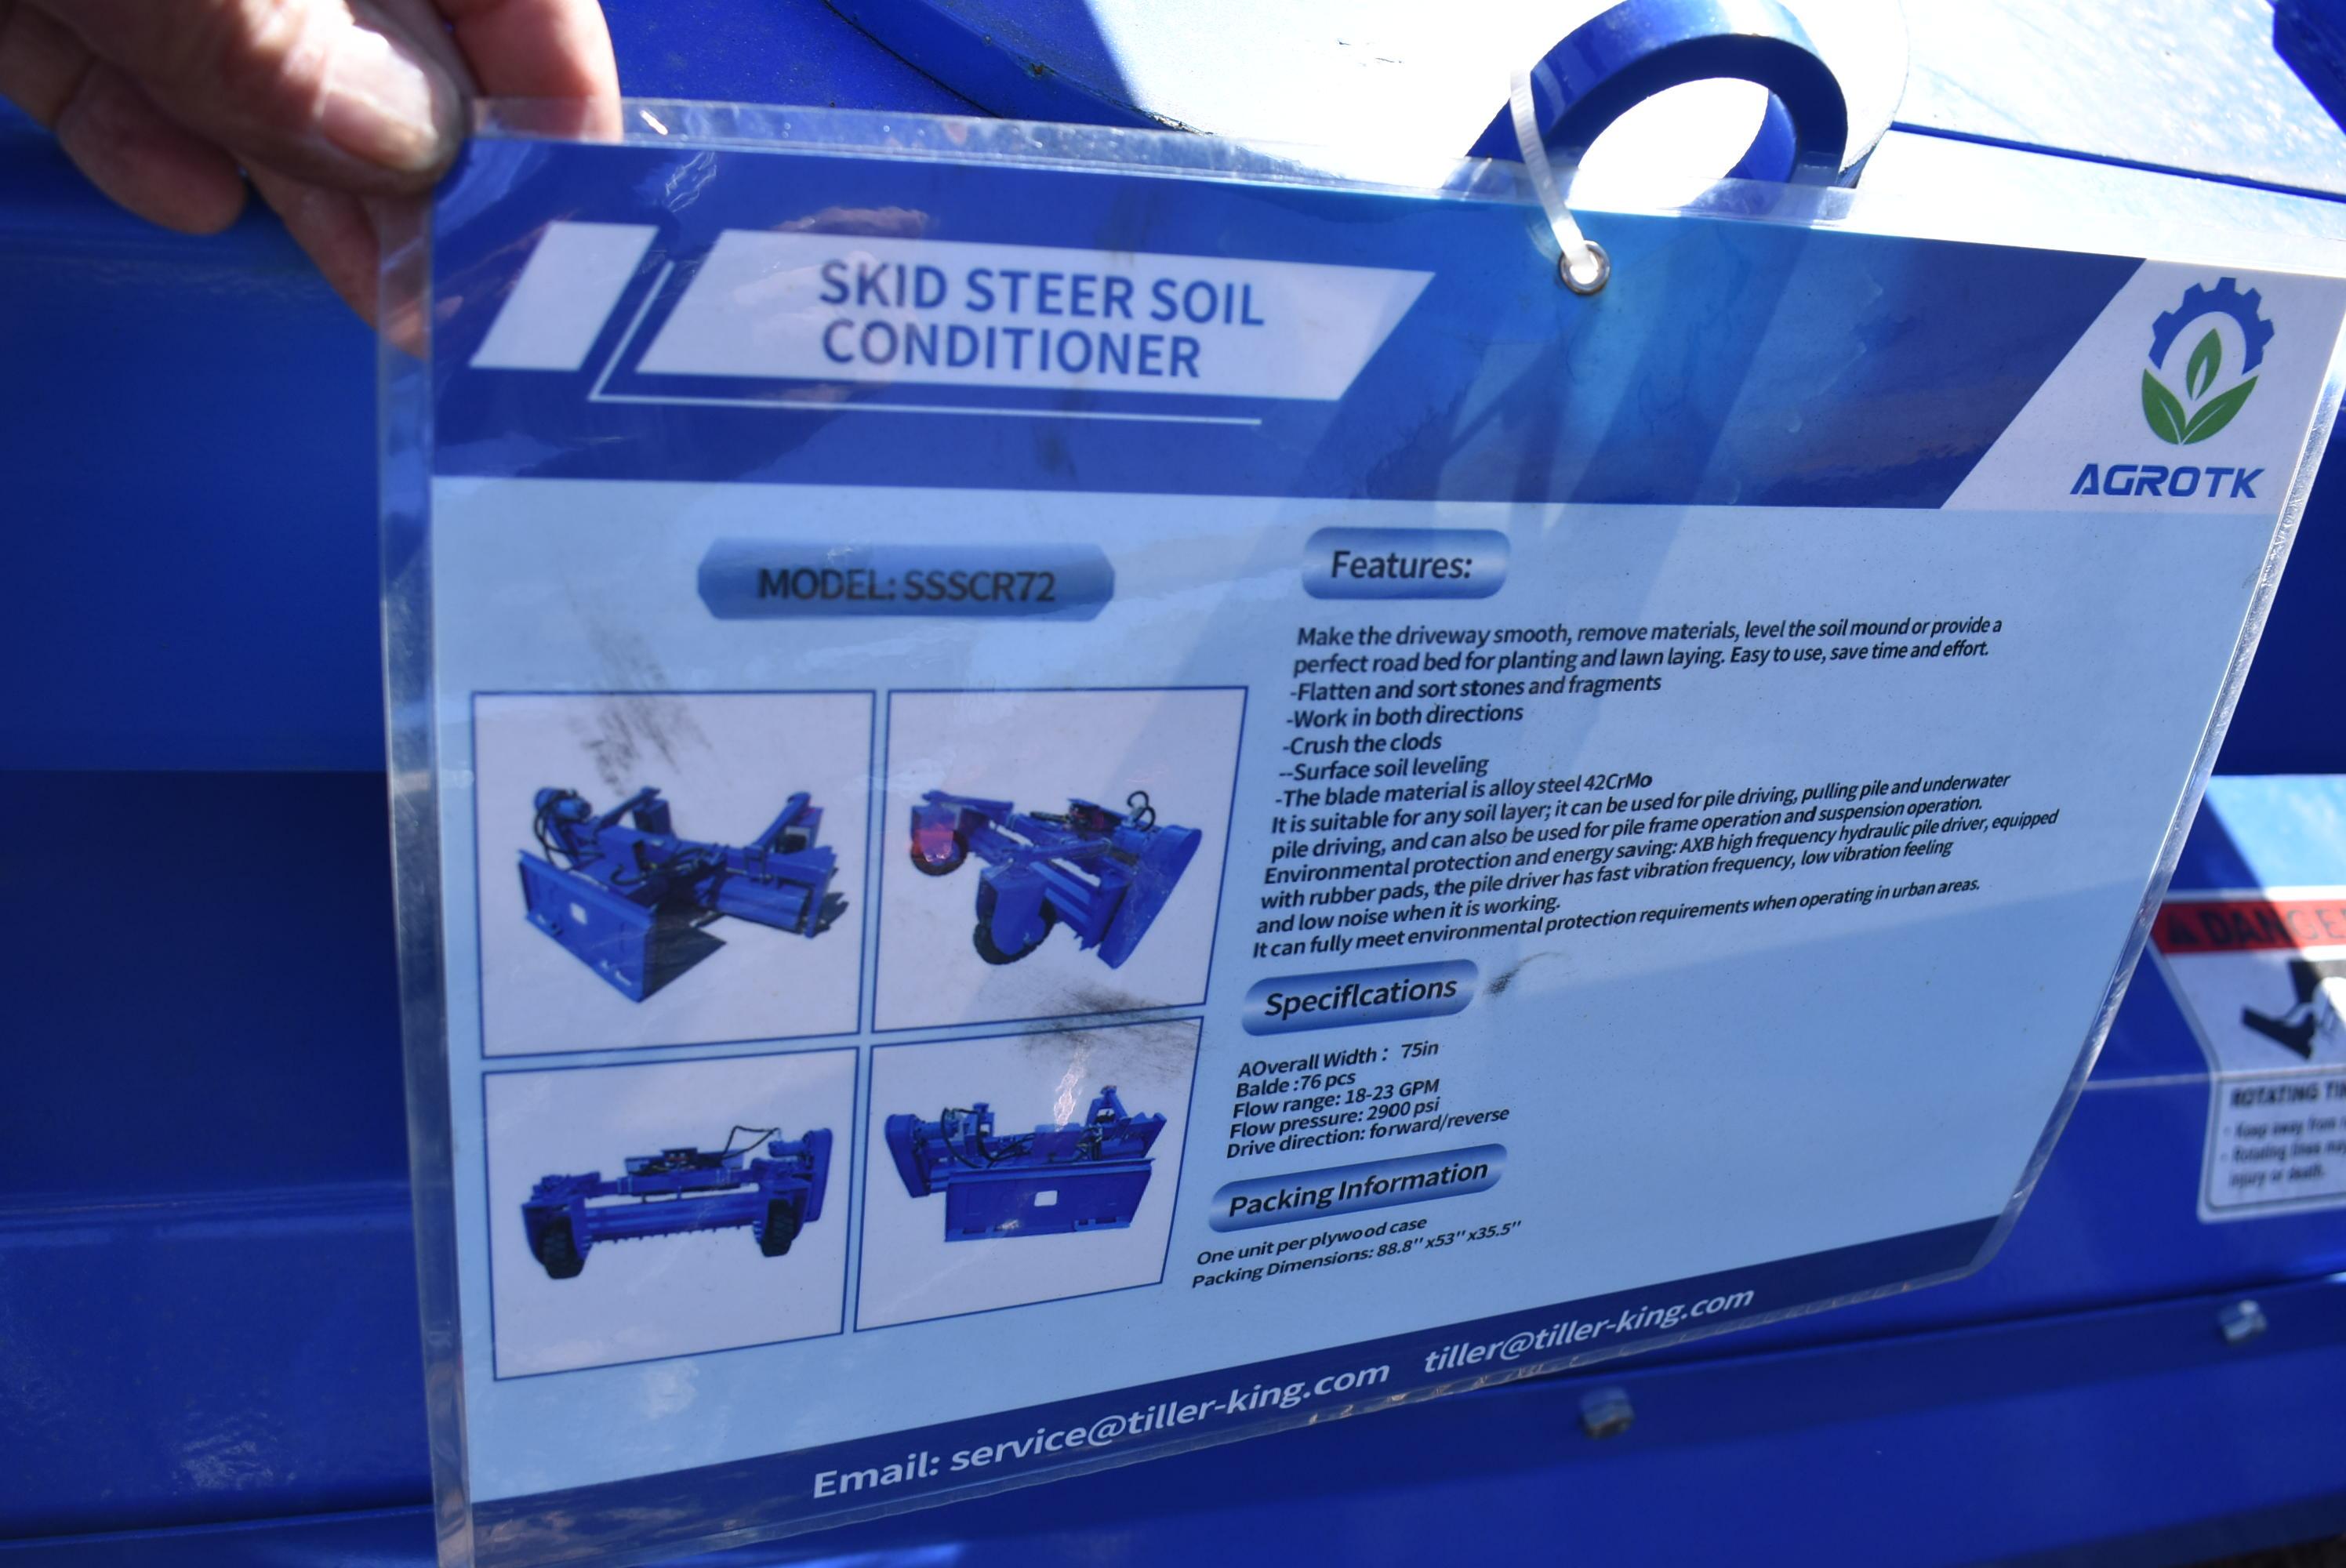 New Agrotk soil conditioner skid steer attachment, model #SSSCR72